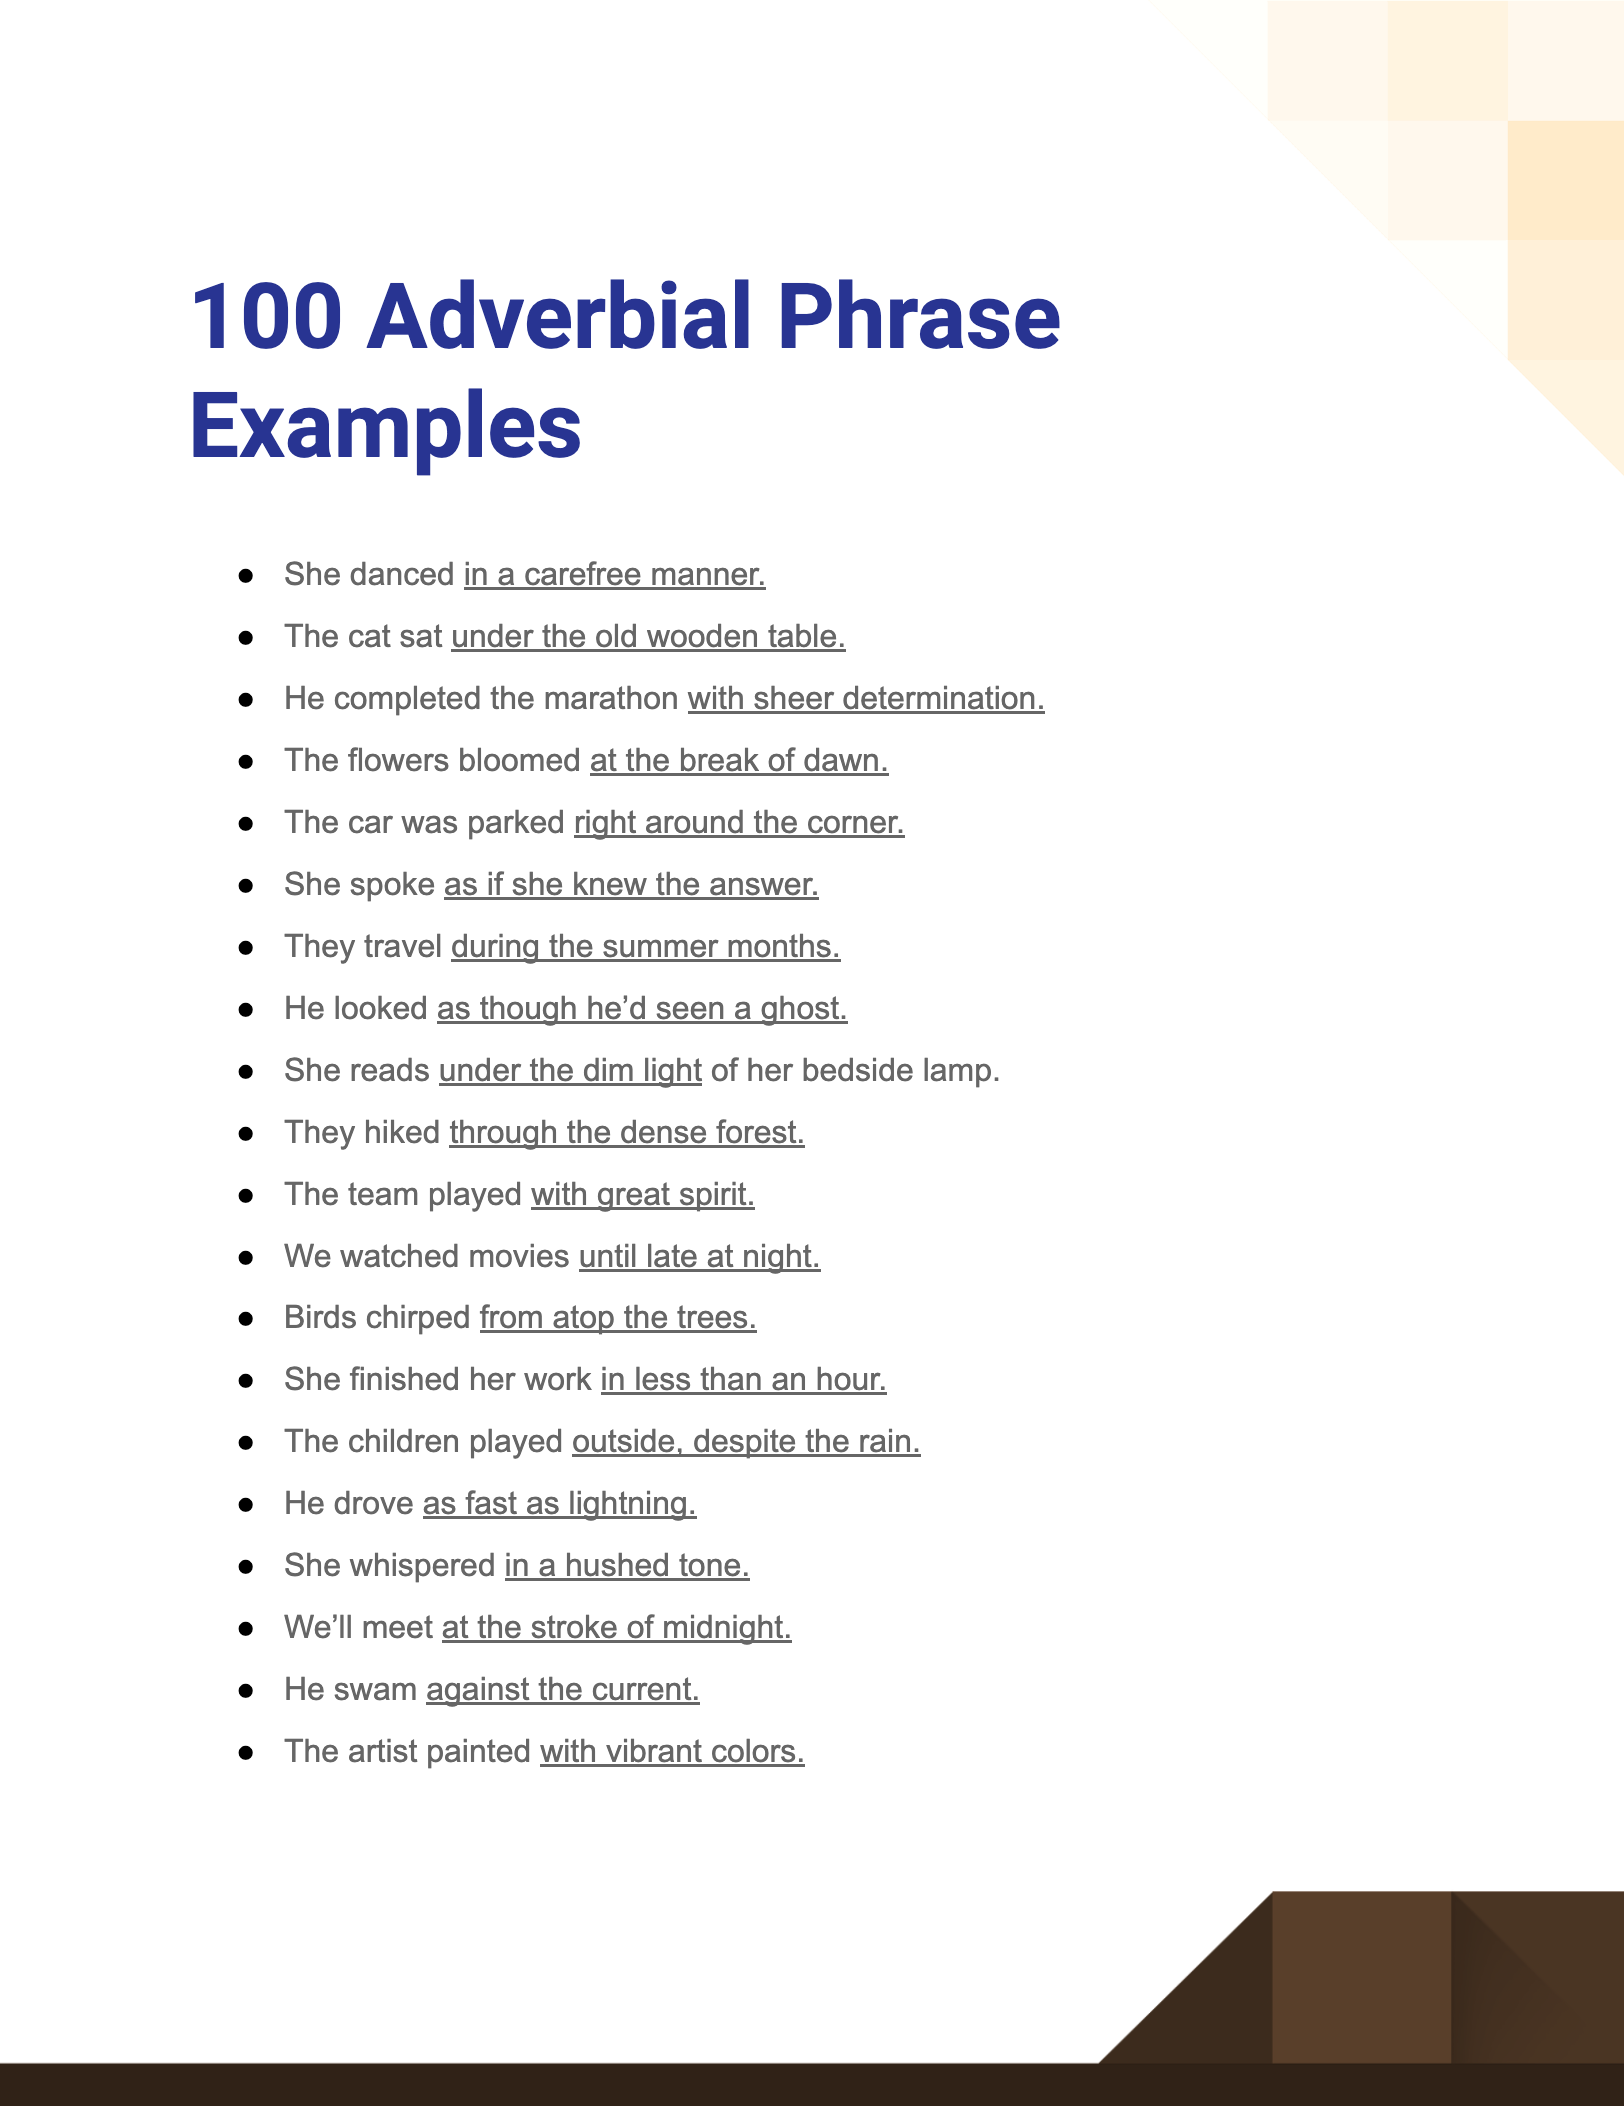 adverbial phrase examples1